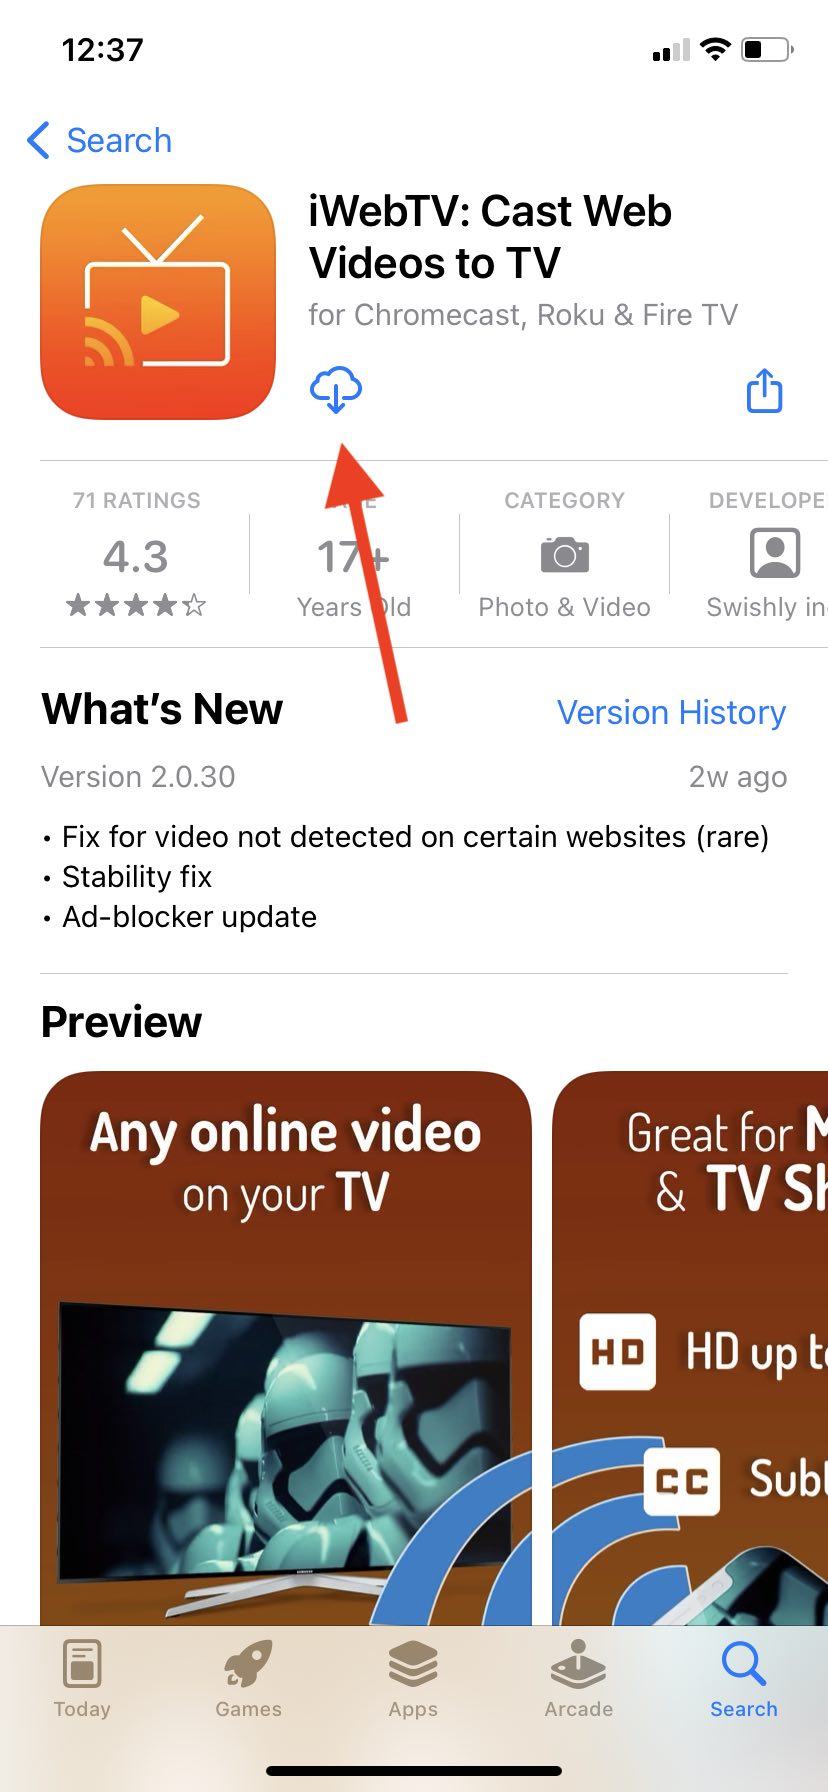 iWebTV in the App Store